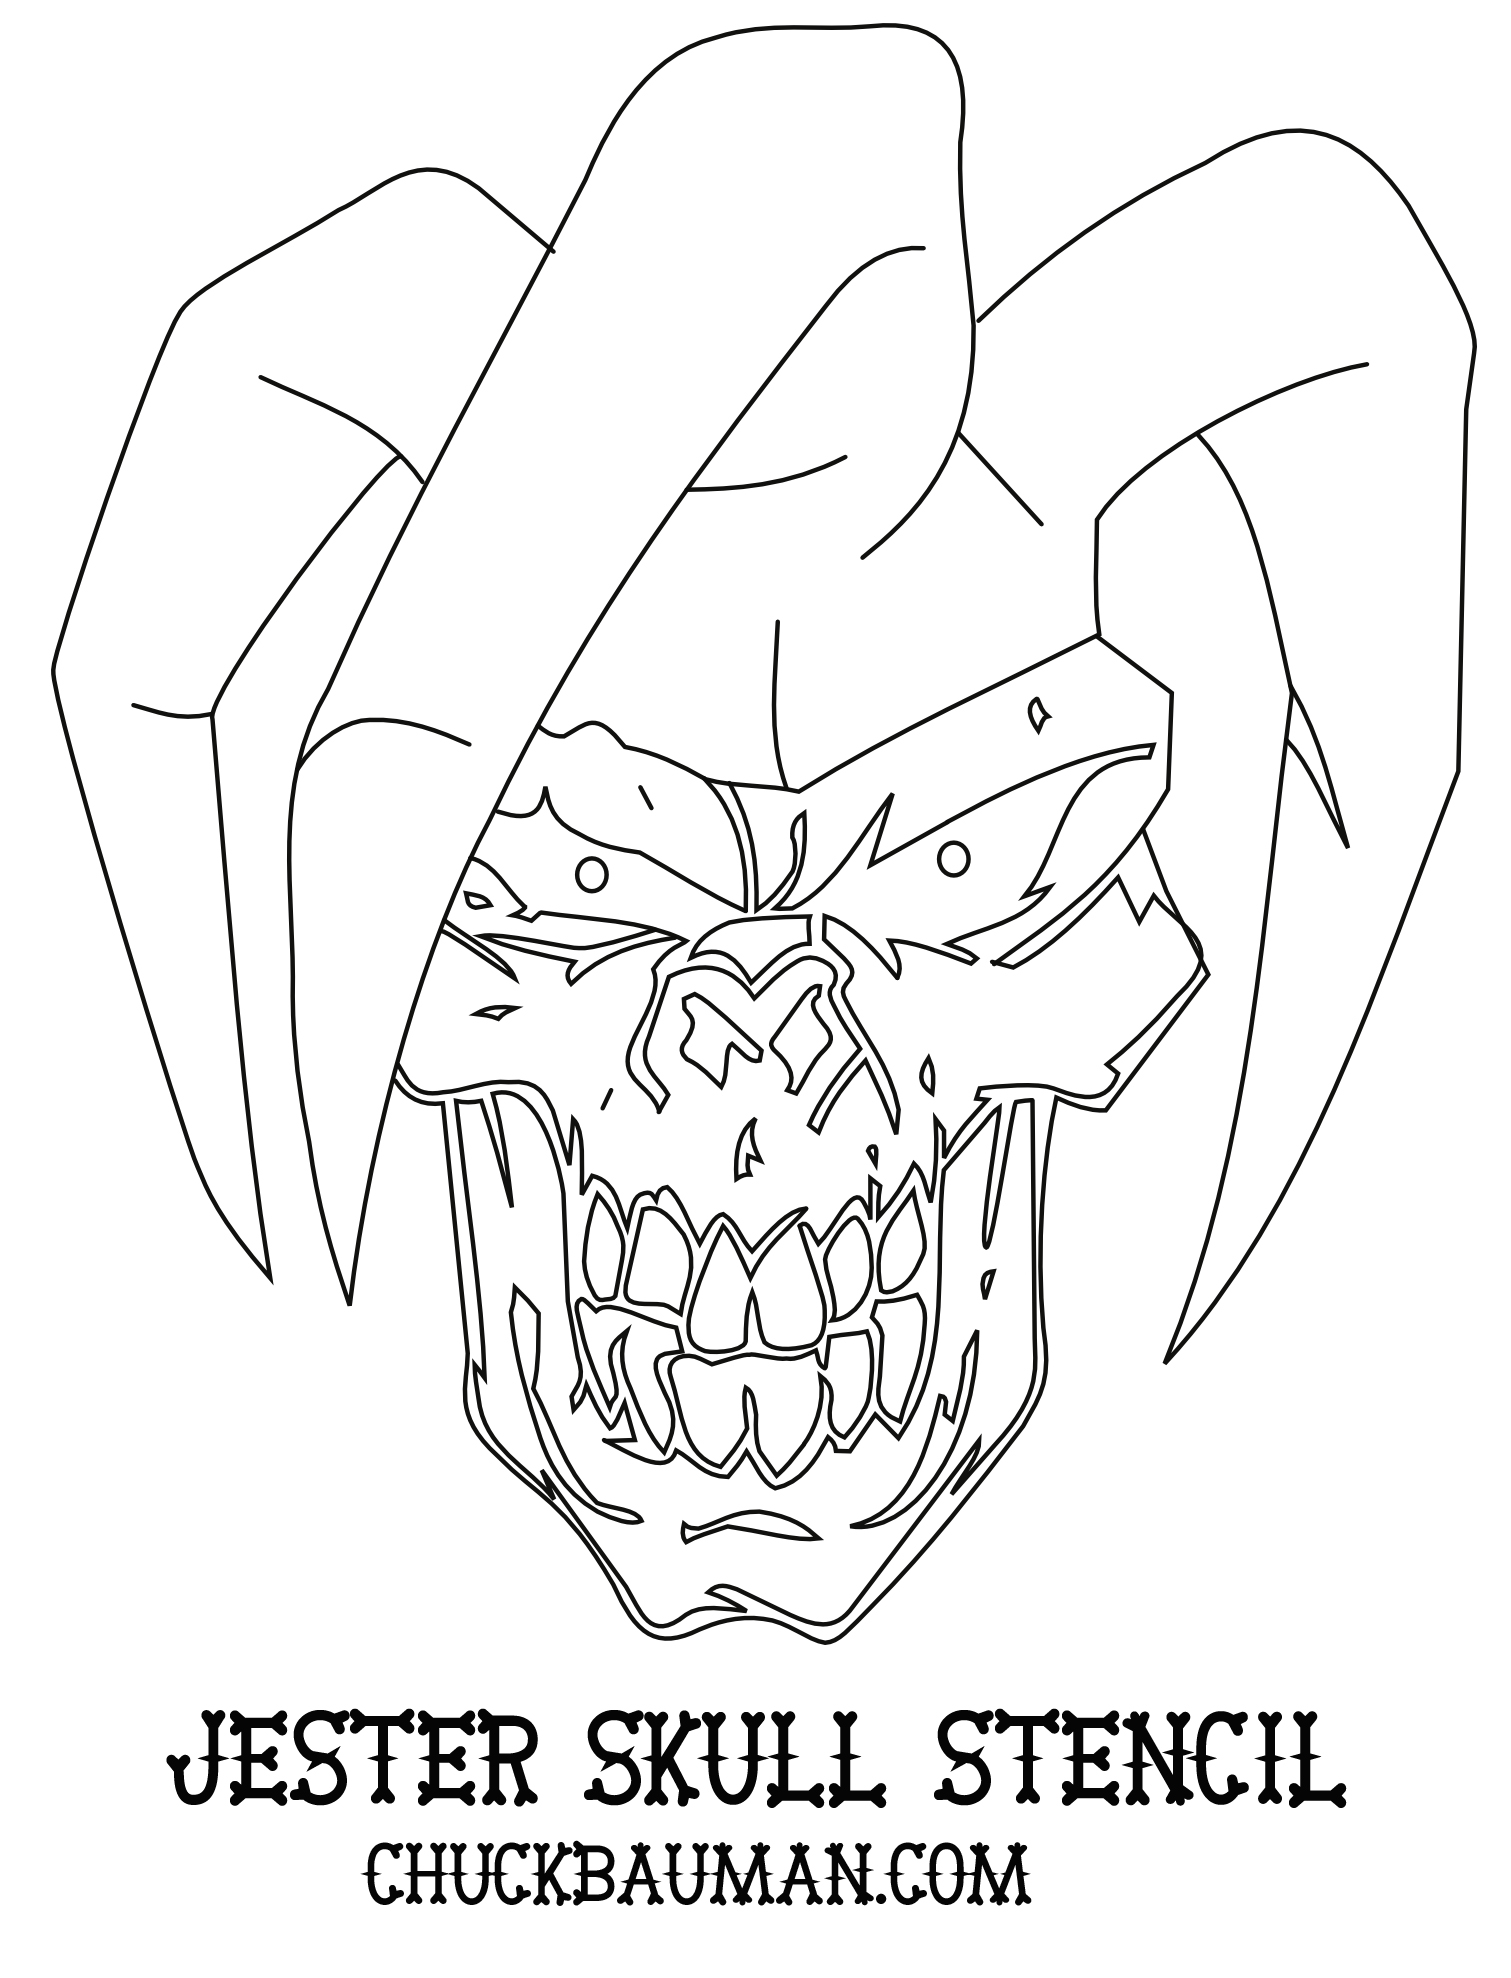 airbrush-skull-jester-stencil-by-crb1177-on-deviantart